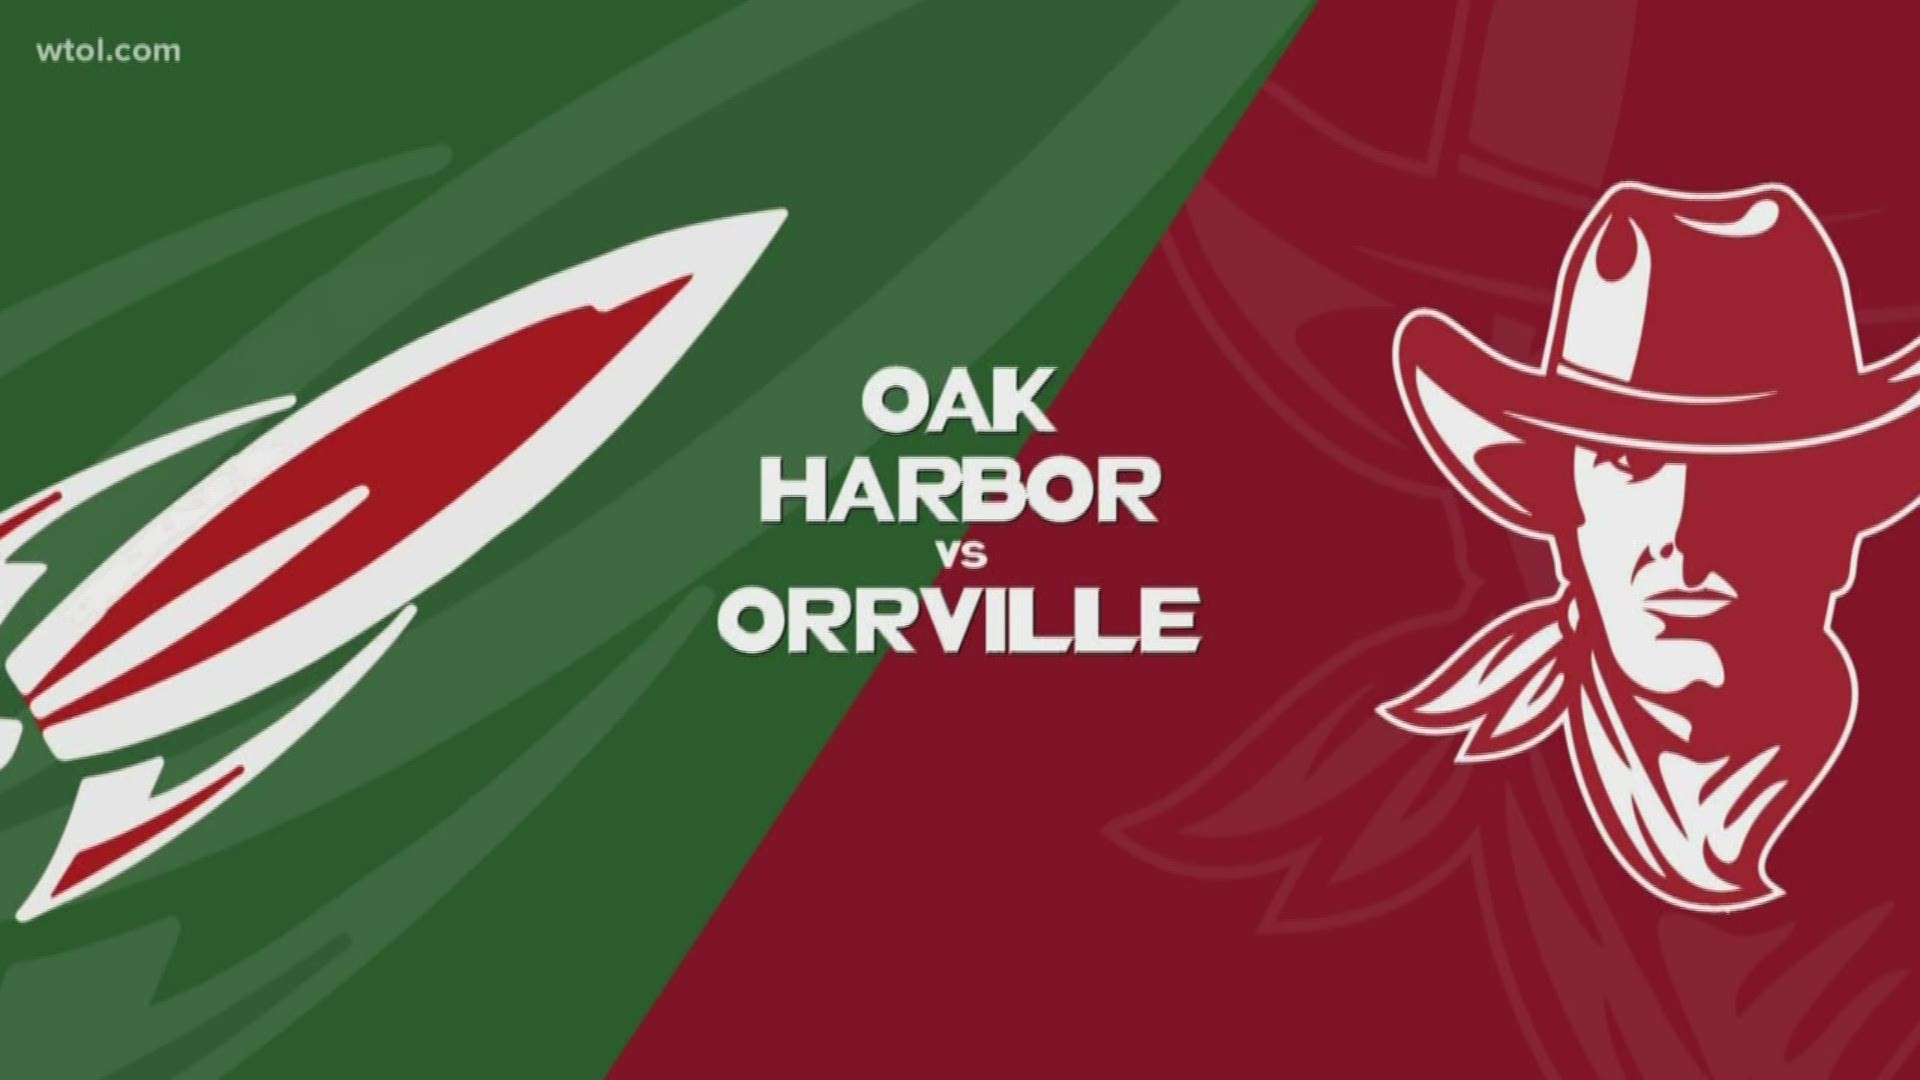 Oak Harbor wins 35-28.